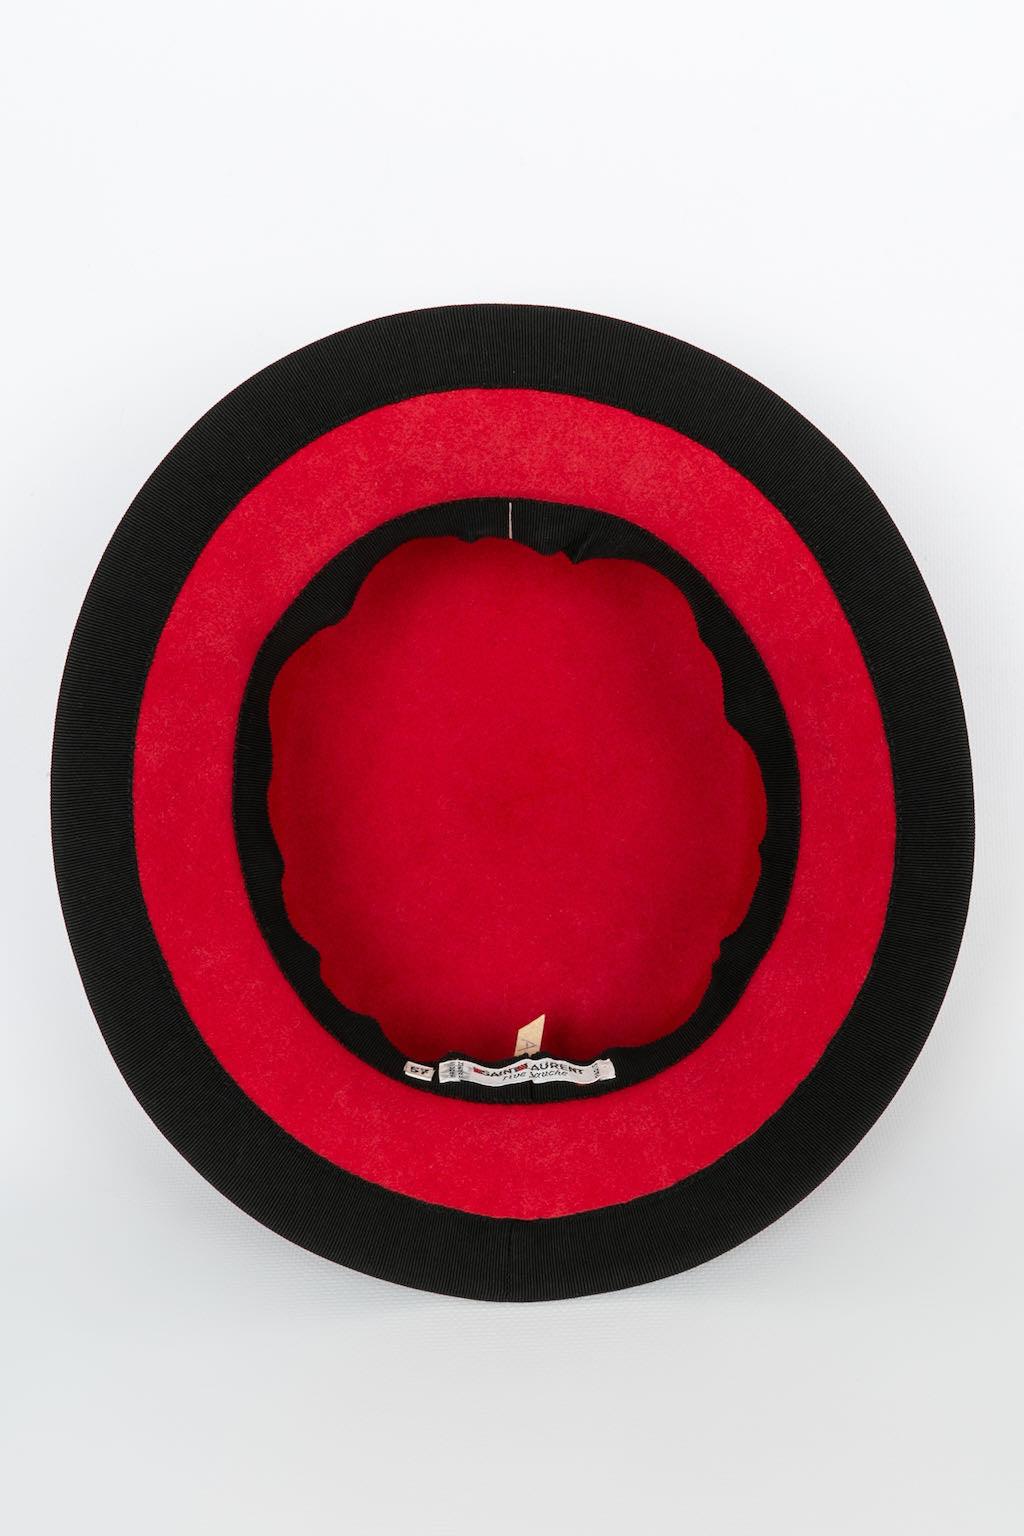 Yves Saint Laurent Red and Black Catwalk Hat 4